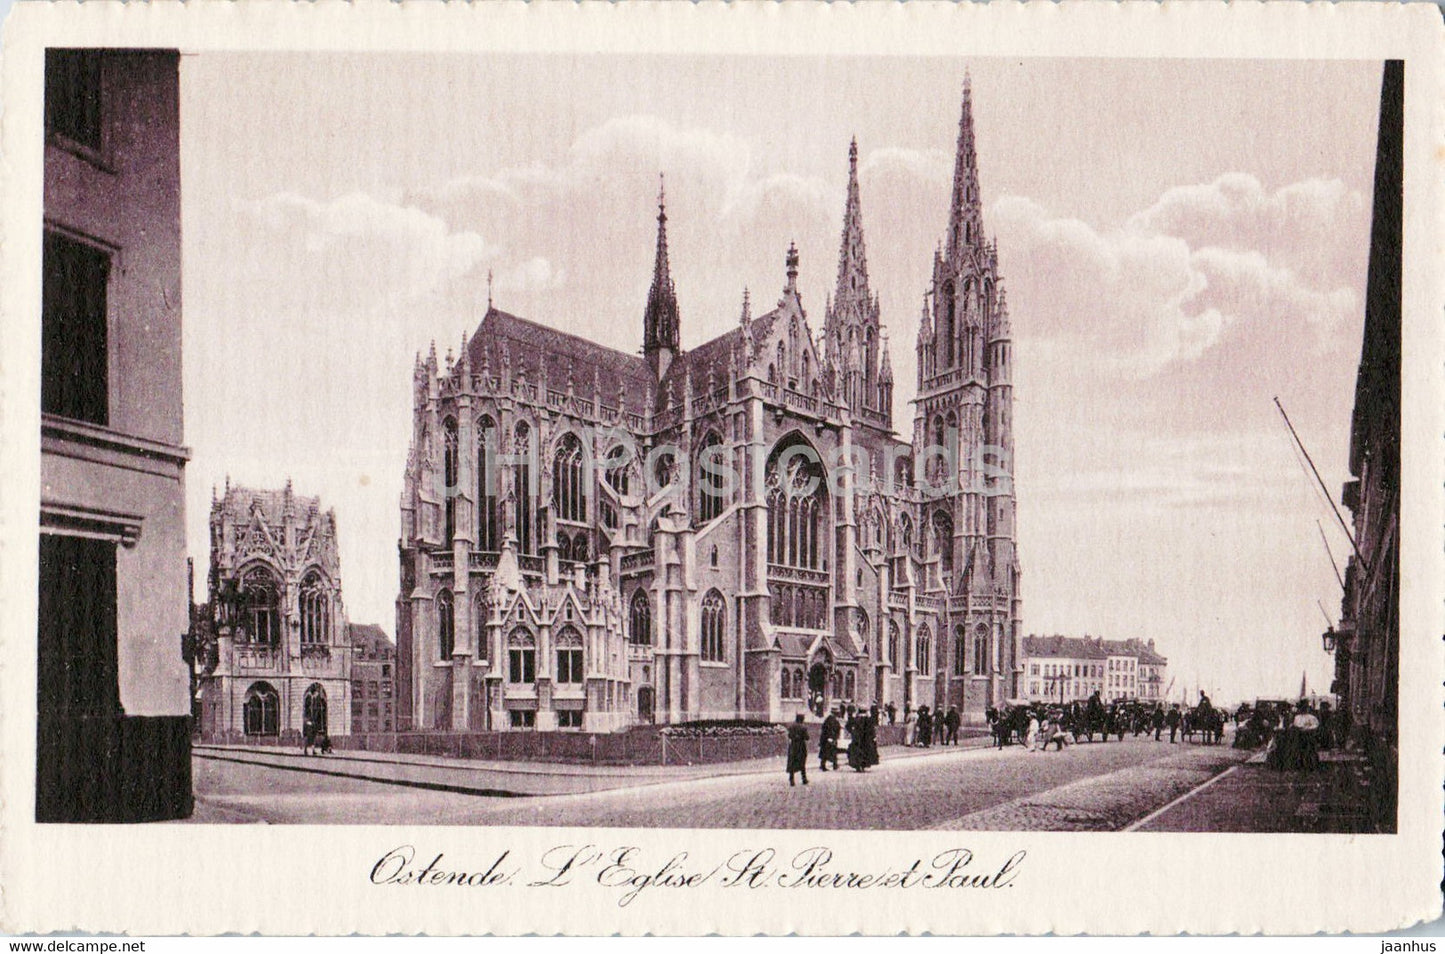 Ostende - Oostende - L'Eglise St Pierre et Paul - church - old postcard - Belgium - unused - JH Postcards